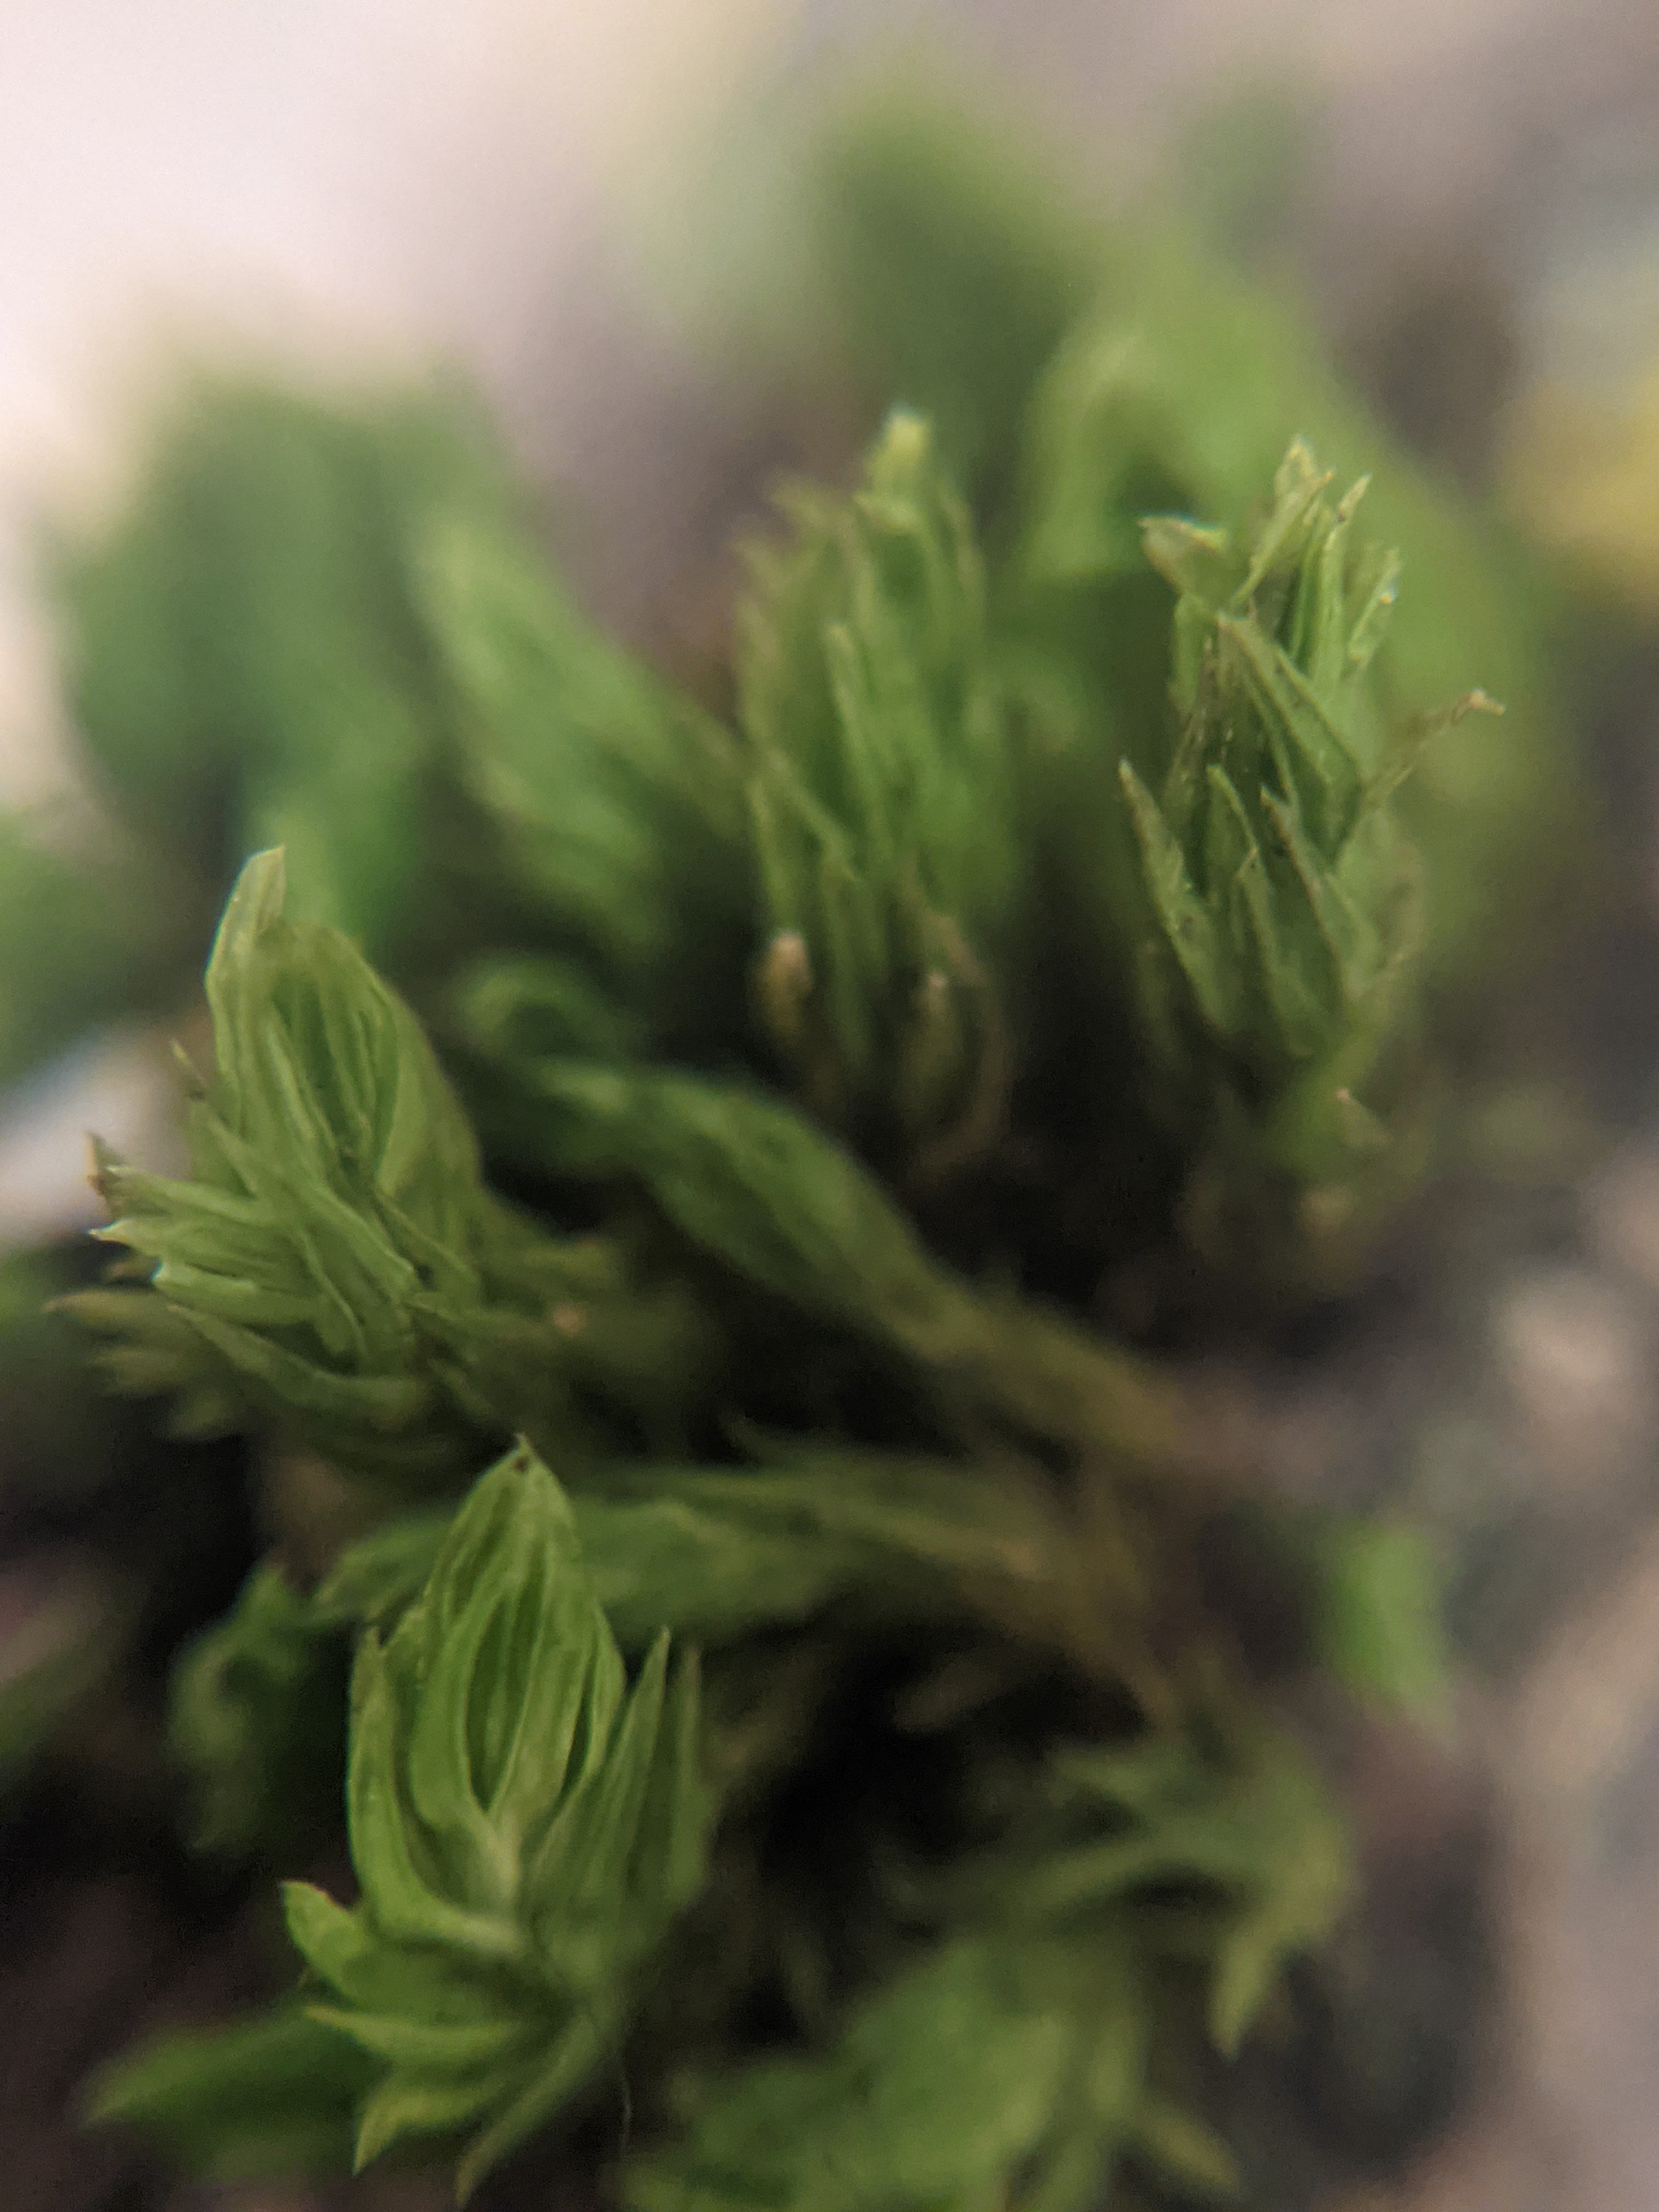 up close at the moss